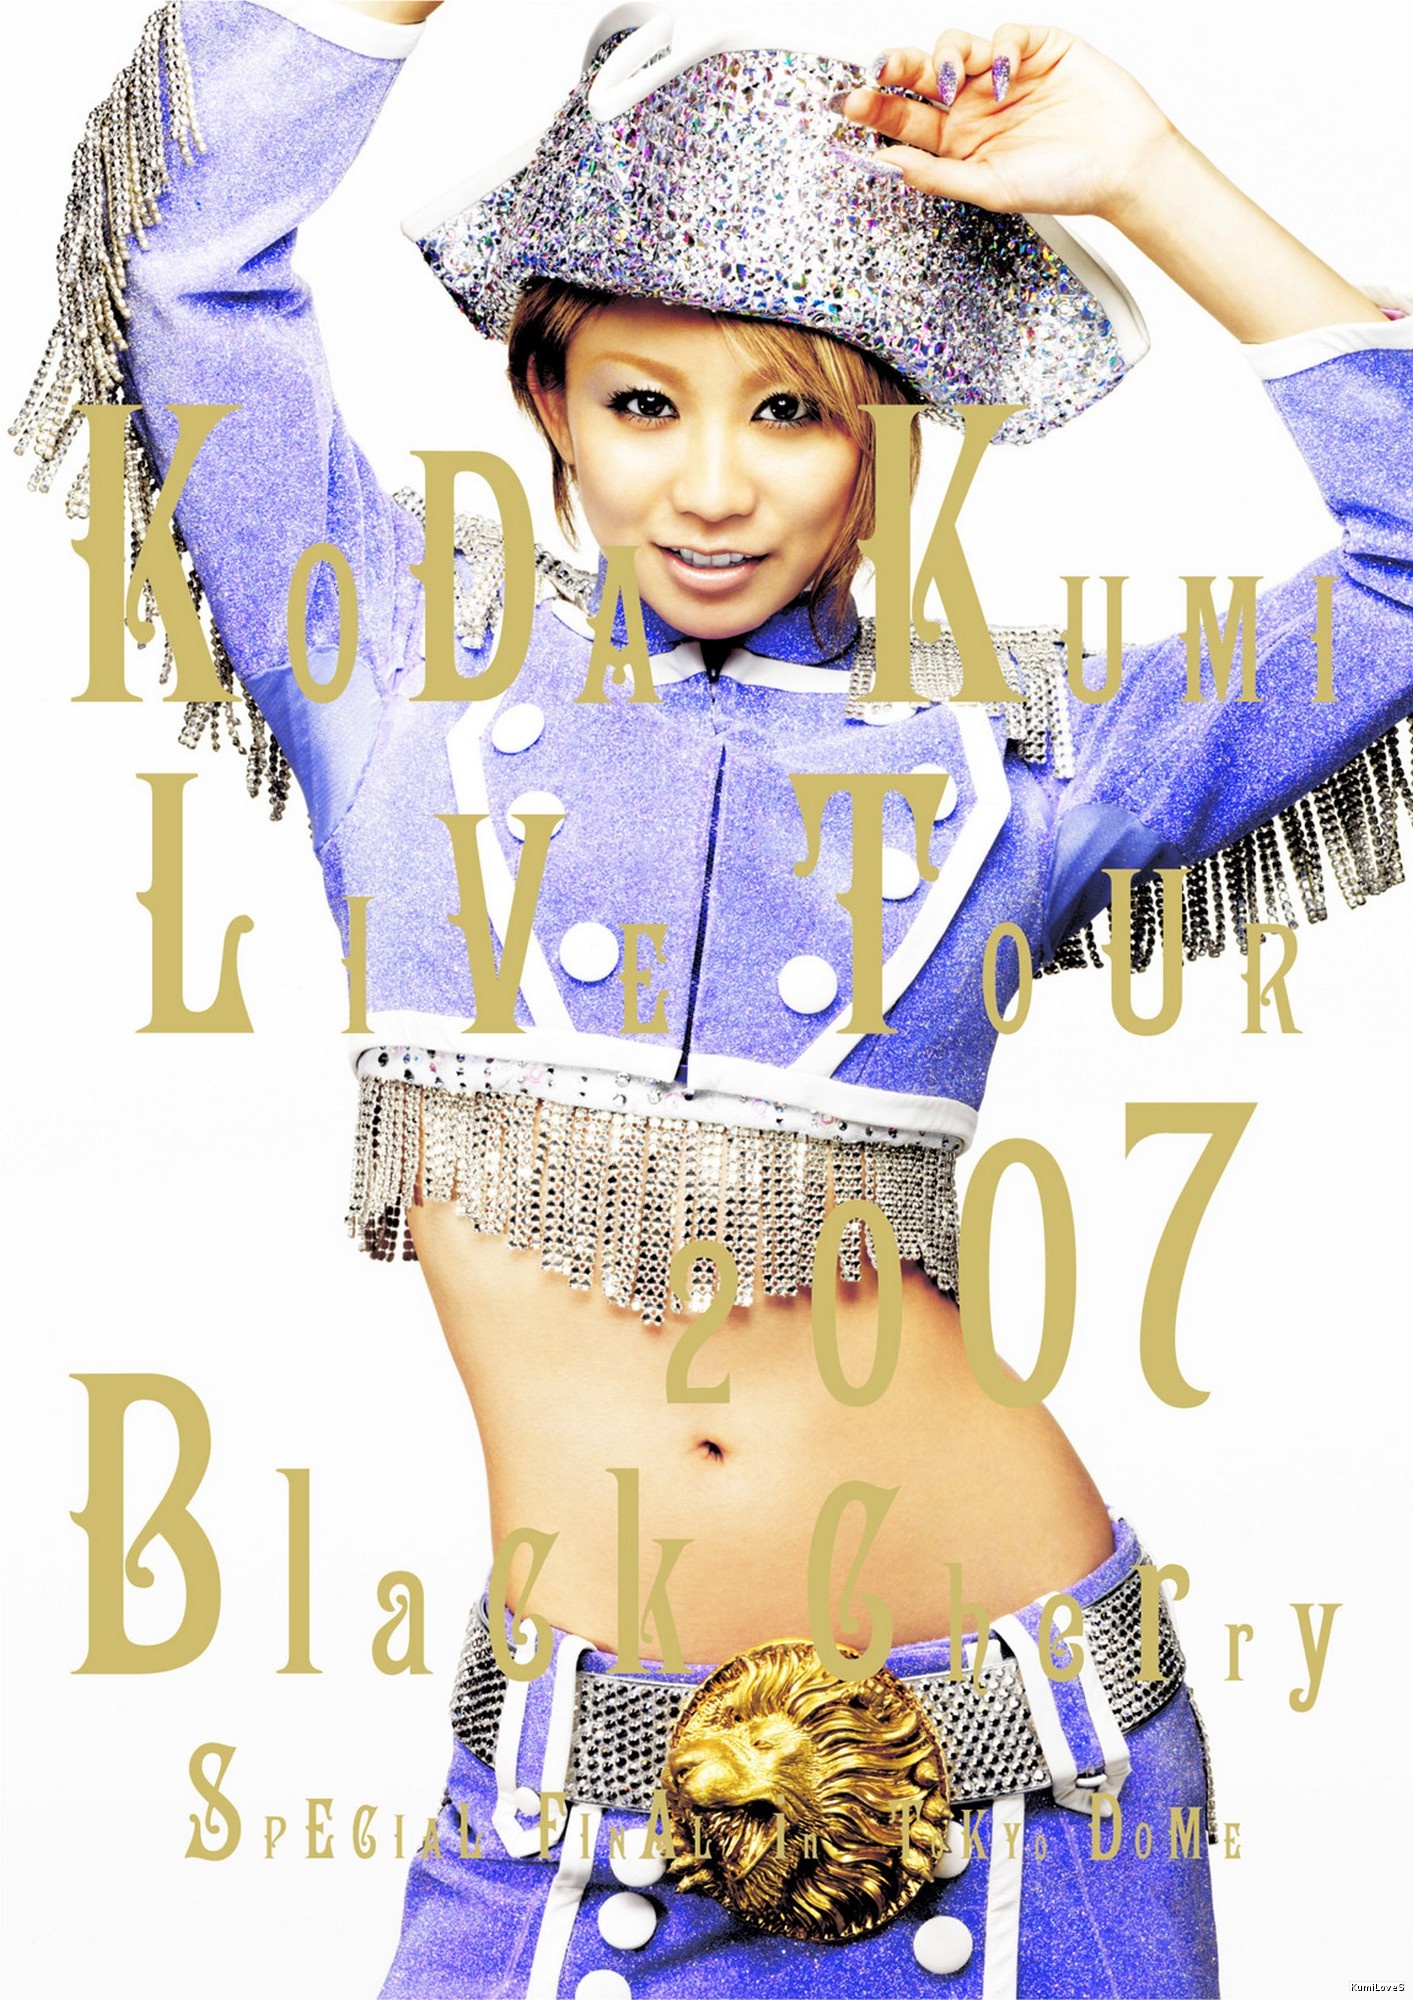 KODA KUMI LIVE TOUR 2007 ~Black Cherry~ 
Special Final at Tokyo Dome (2DVD)